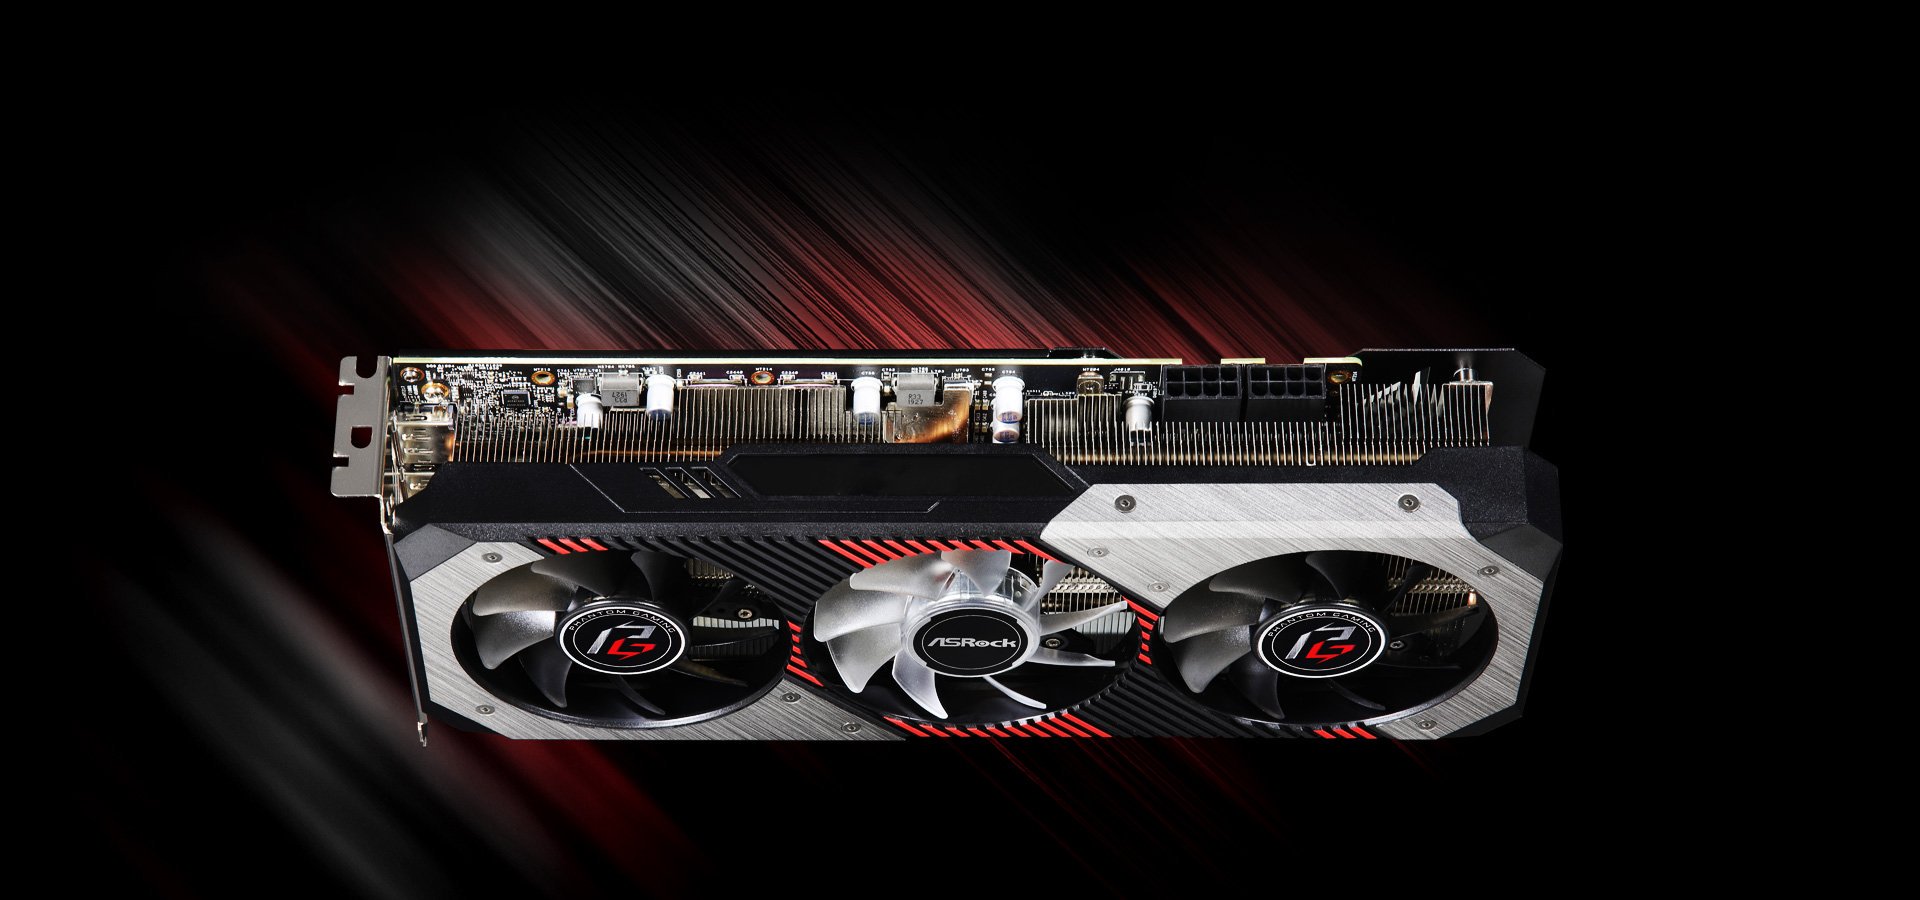 Asrock Radeon Rx 5700 Xt Phantom Gaming D Oc Top Sellers, UP TO 55 